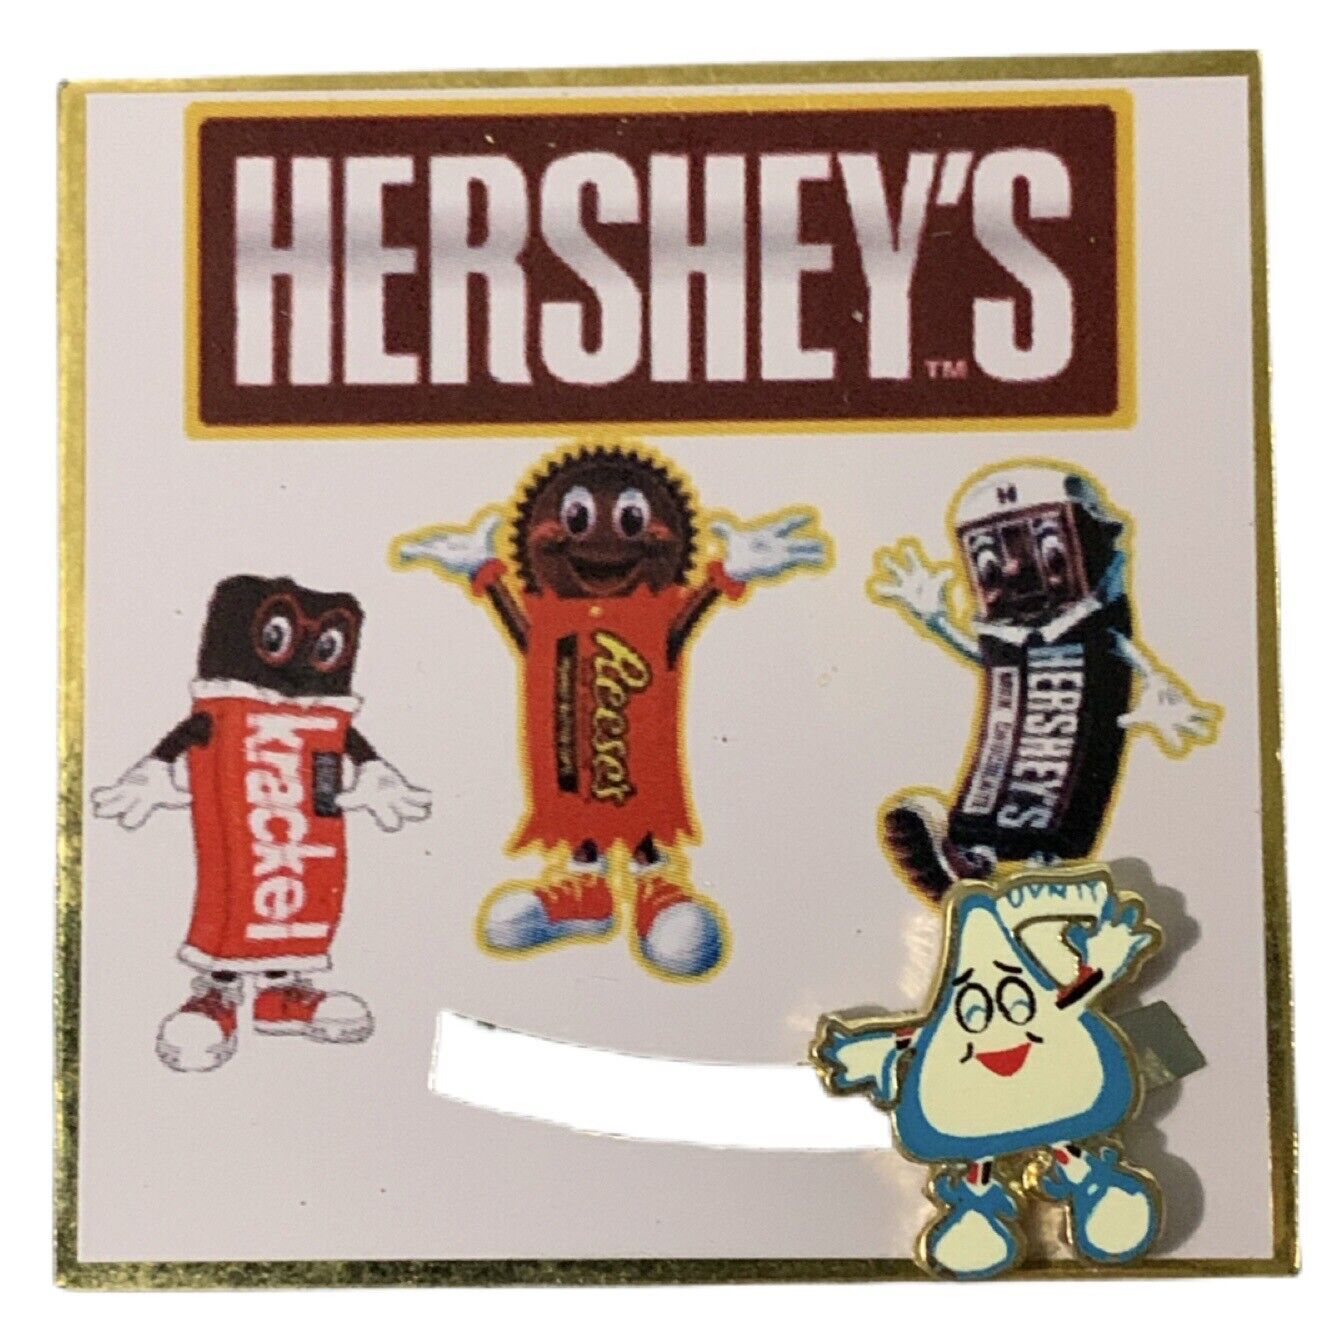 Hershey's Chocolate Krackel Reese’s Hershey's Milk Chocolate Kiss Souvenir Pin